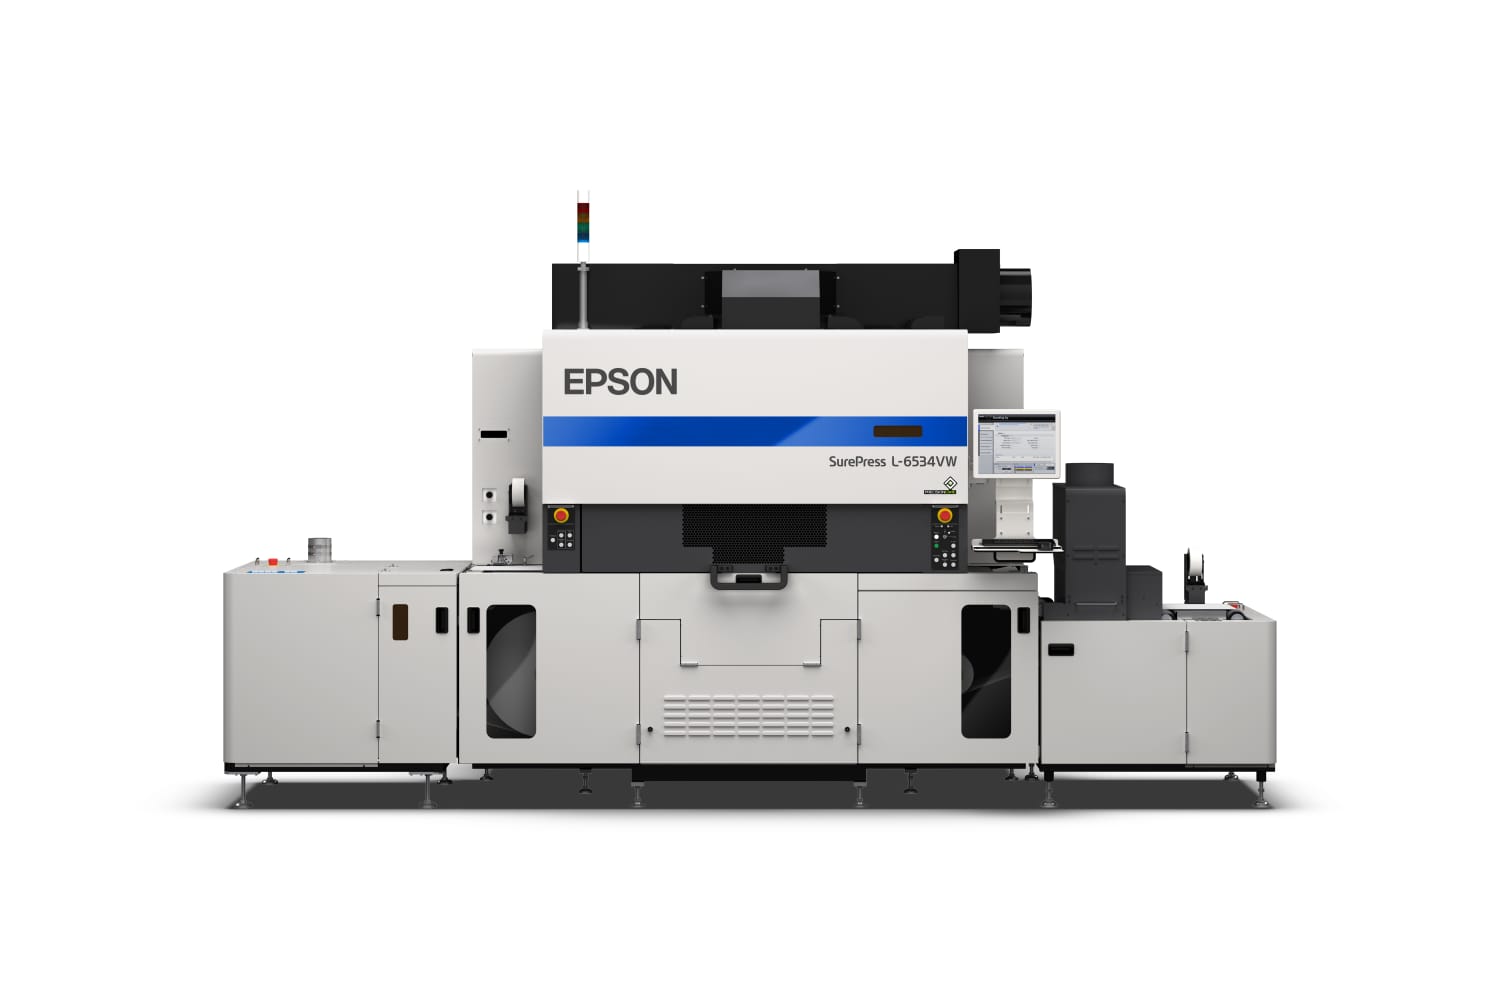   Epson Memperkenalkan SurePress L-6534VW Tinta Oranye Jadi Lebih Kaya Warna Dilabel UV dan Industri Kemasan